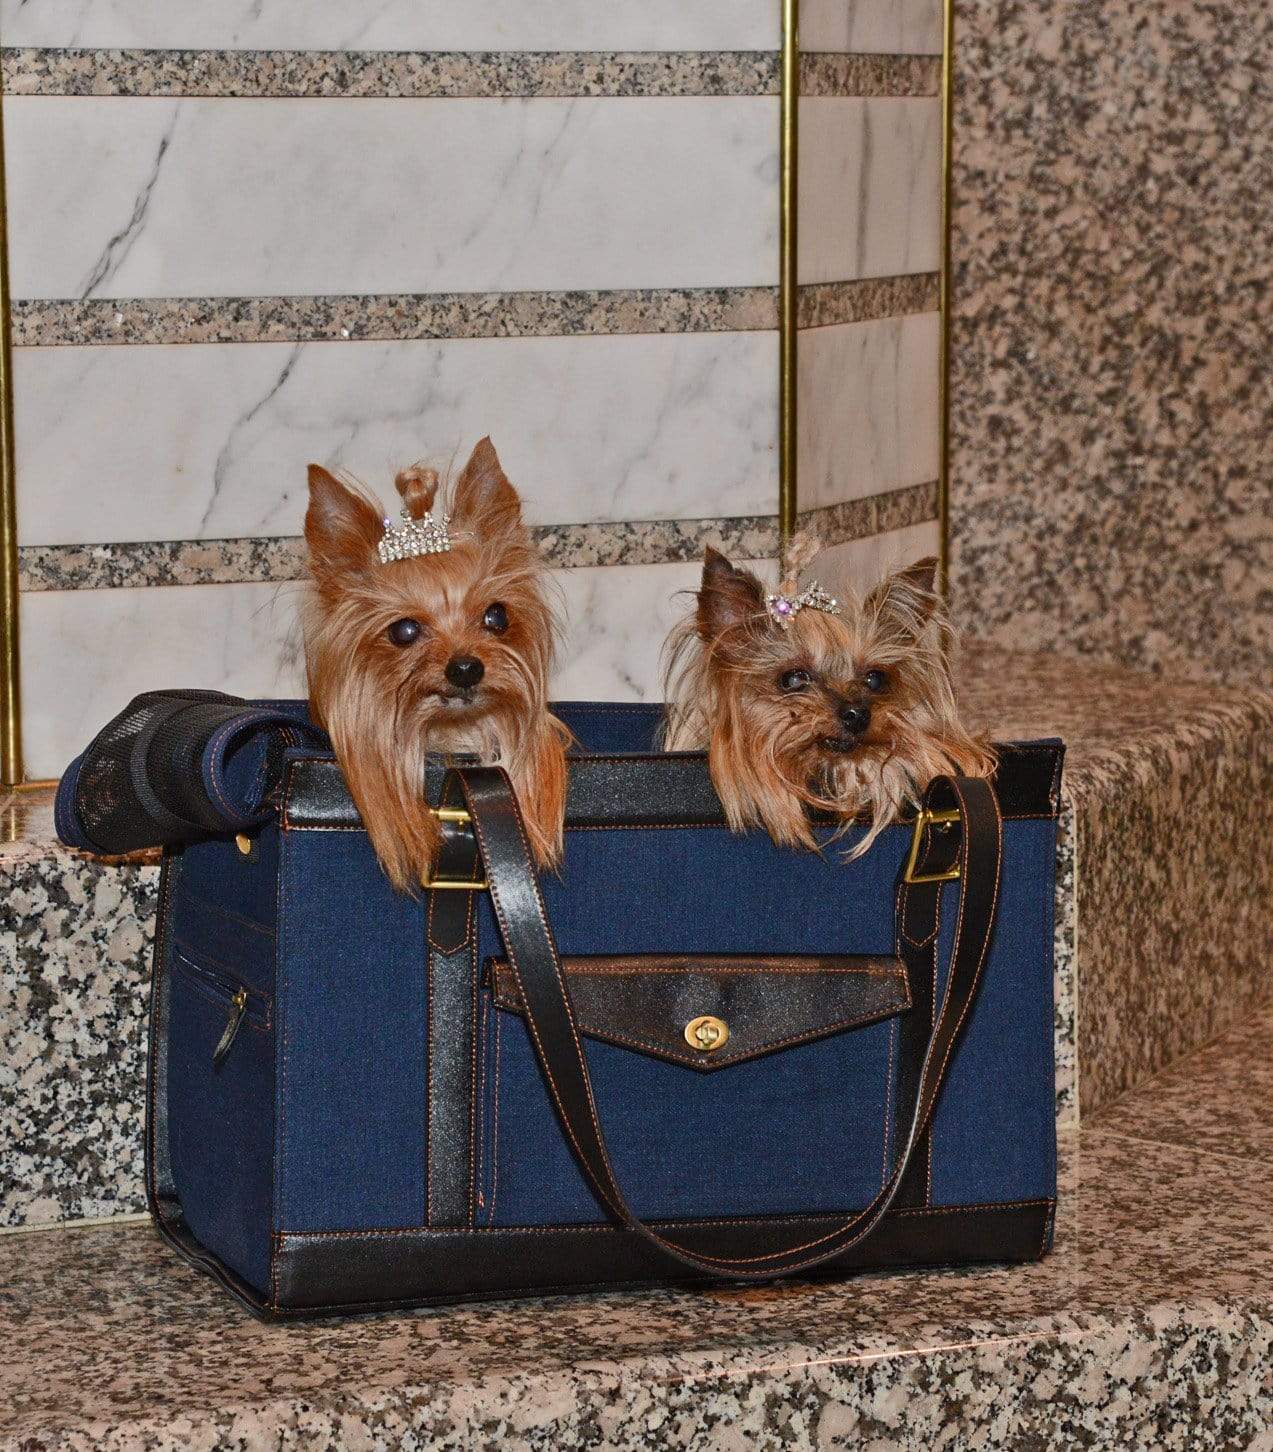 2 cute dogs in Pippa pet carrier